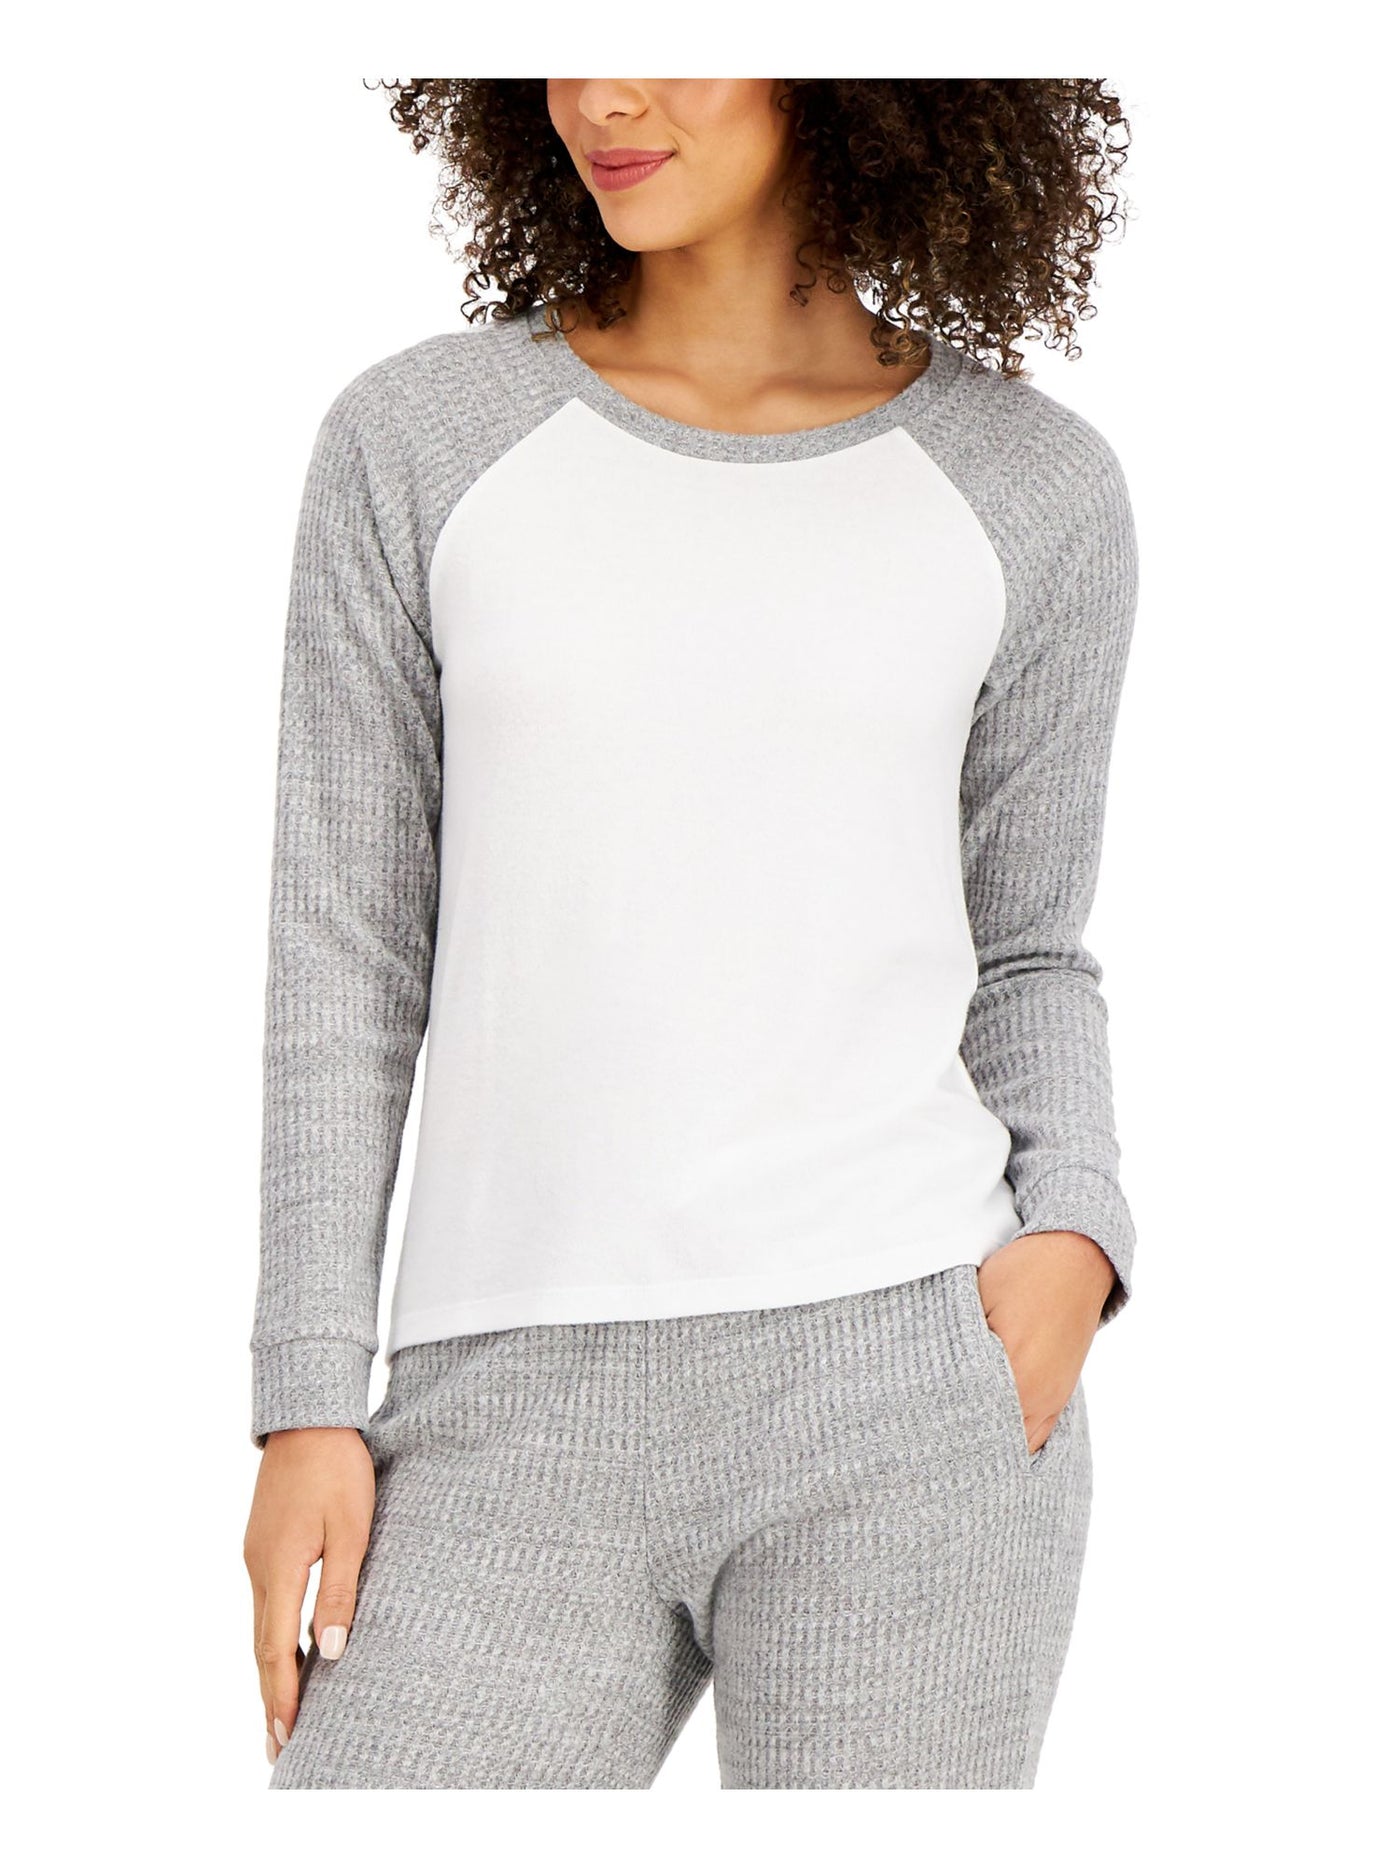 ALFANI Intimates Gray Sleep Shirt Pajama Top L